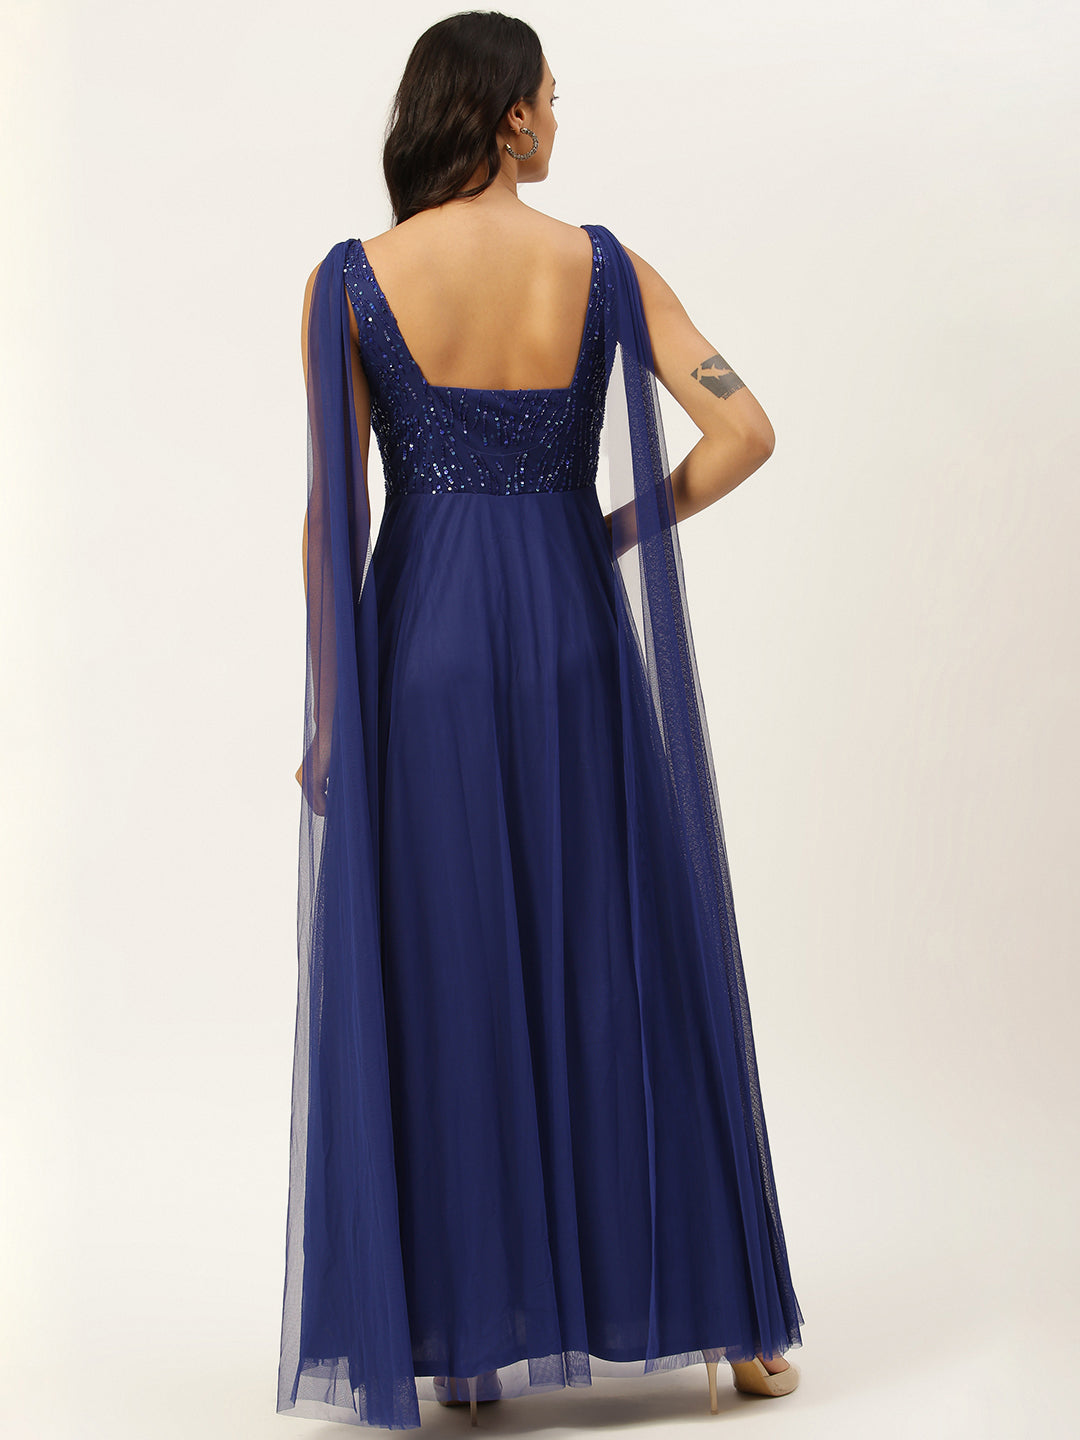 Blue Embellished Sleeveless Gown with Back Drape